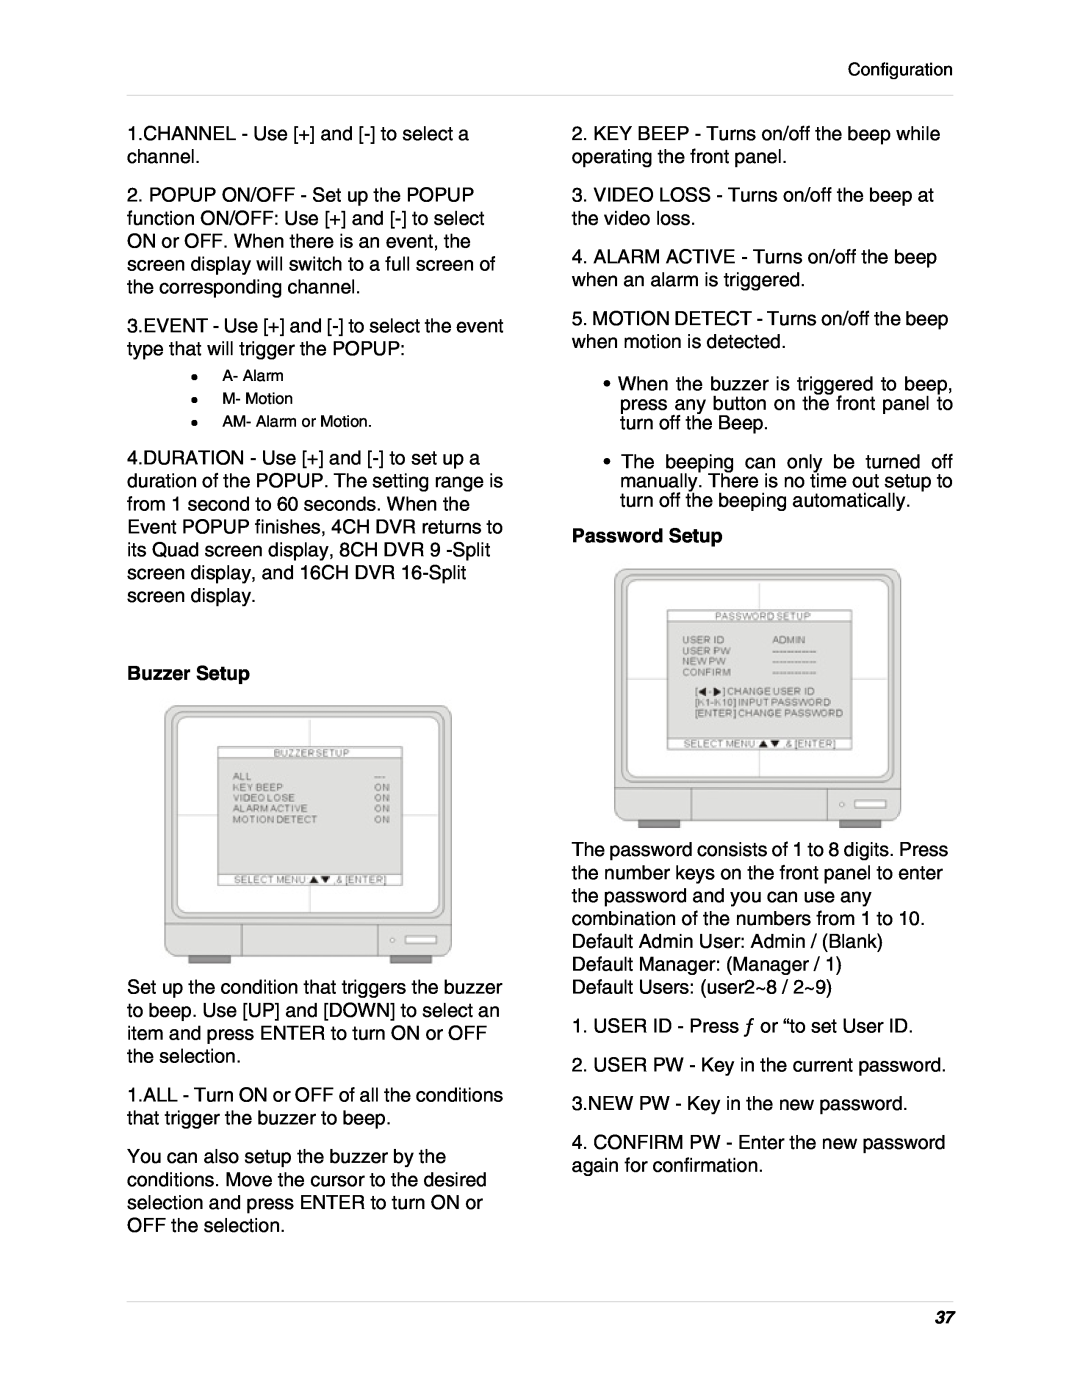 LOREX Technology L19lD1616501 instruction manual Buzzer Setup, Password Setup 